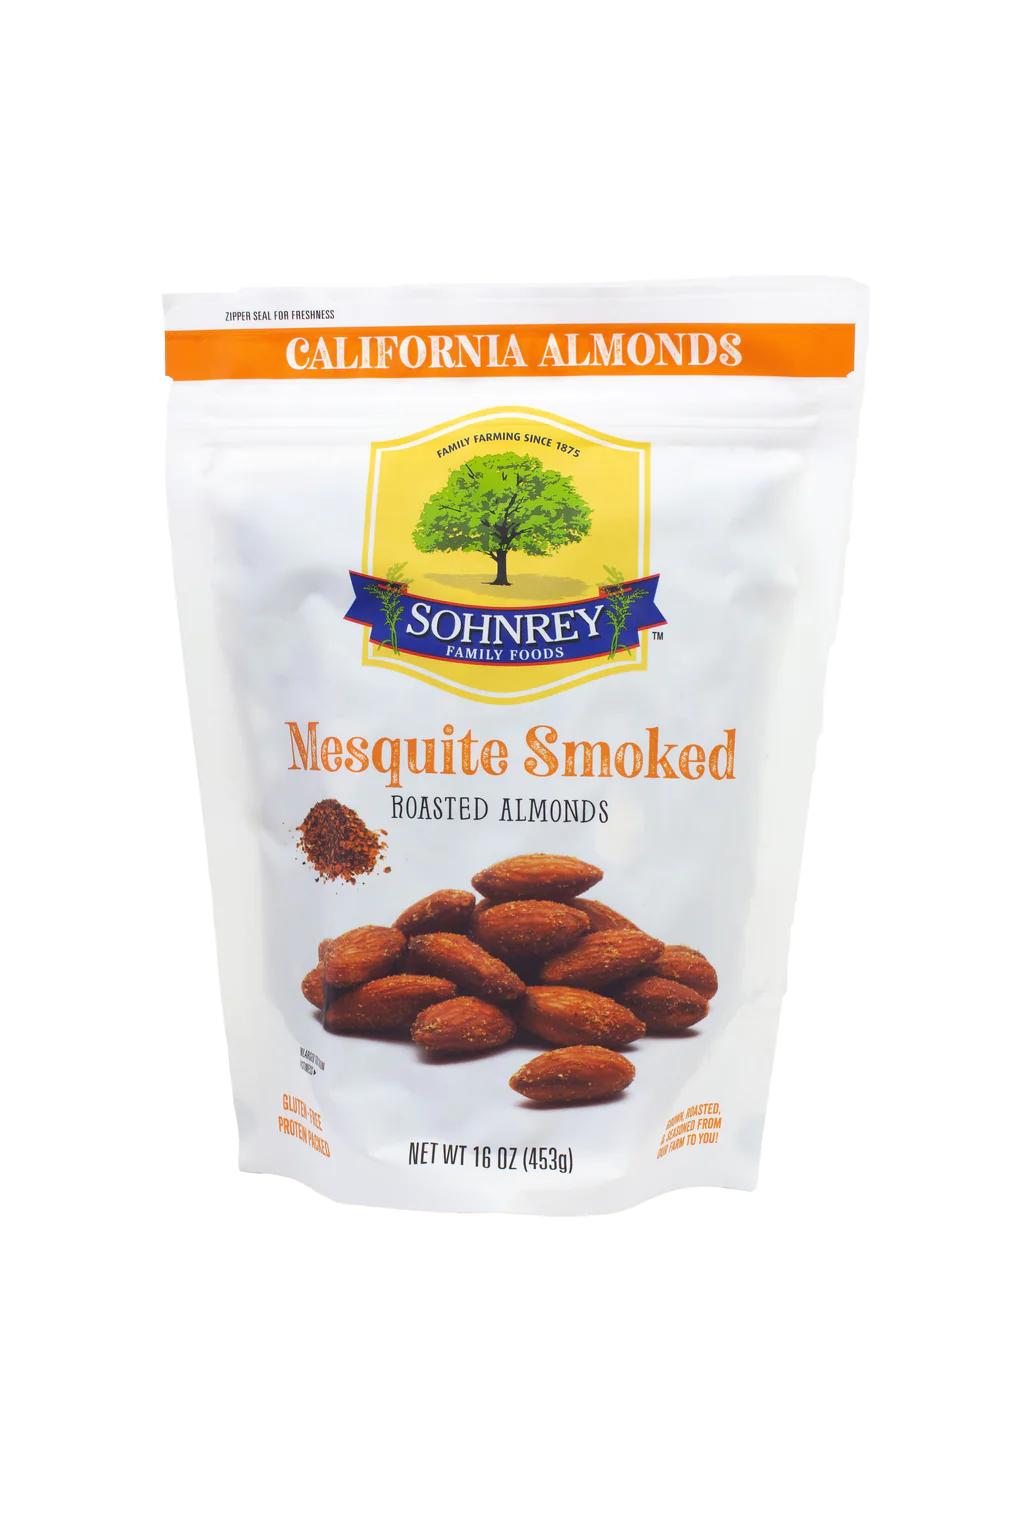 mesquite smoked almonds - What are Smokehouse almonds